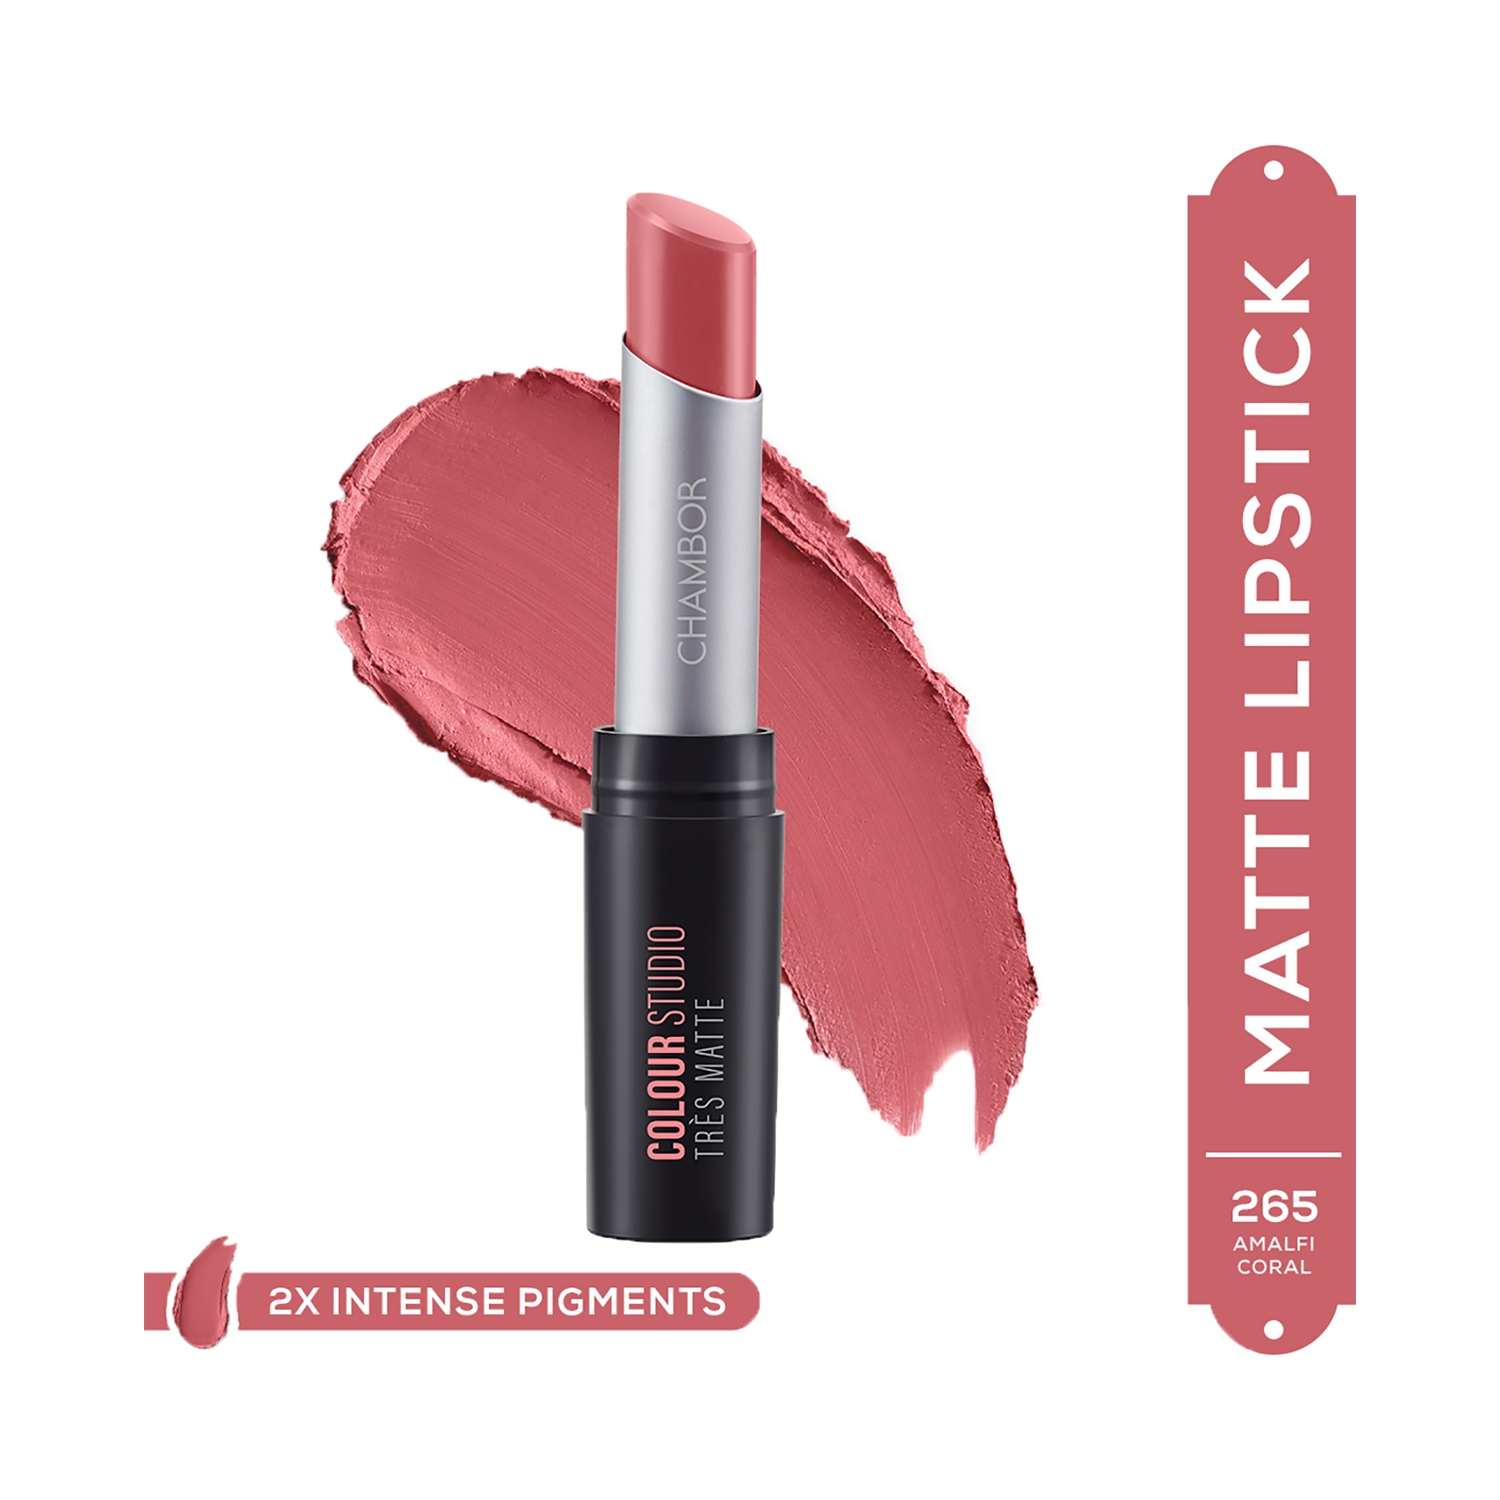 Chambor Tres Matte Lipstick Lasting Bold Pigment with SPF 30 - N 265 Amalfi Coral (3.2g)